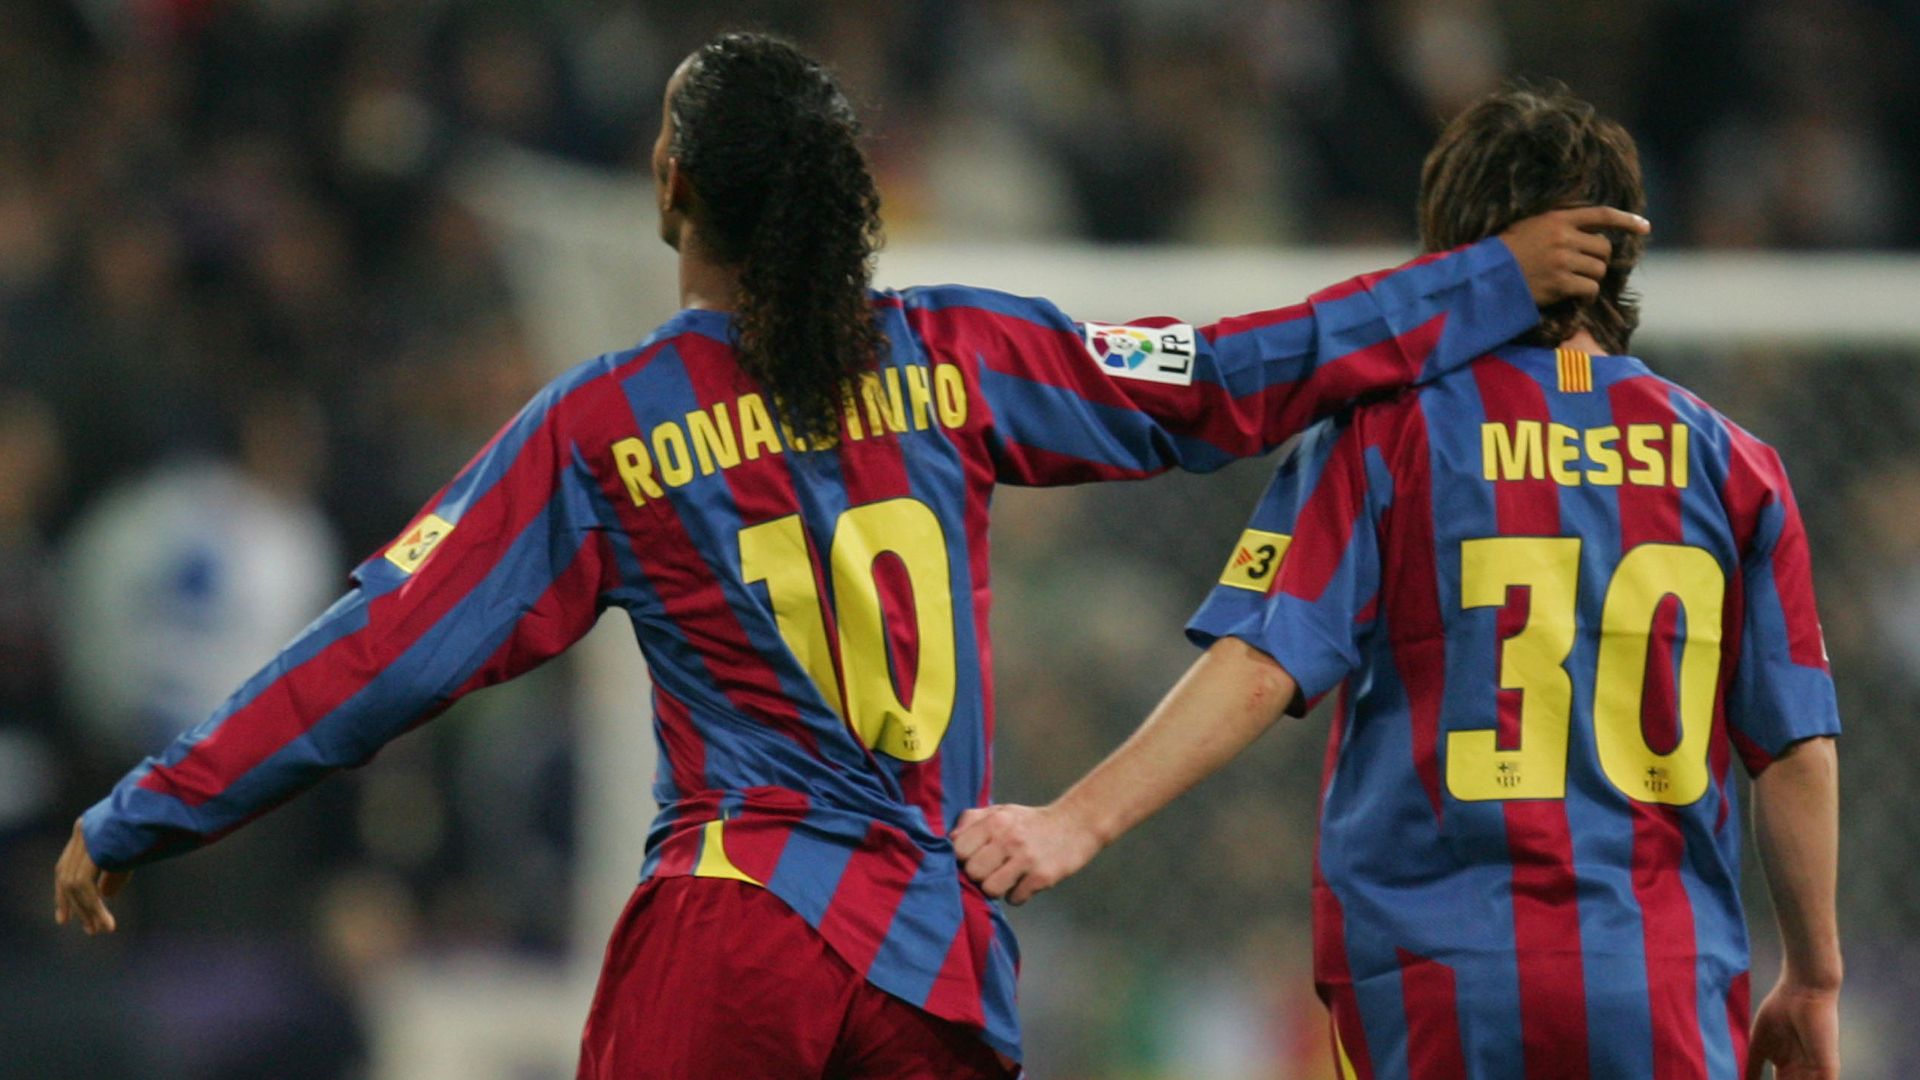 Messi or Ronaldo? Ronaldinho was more talented than both